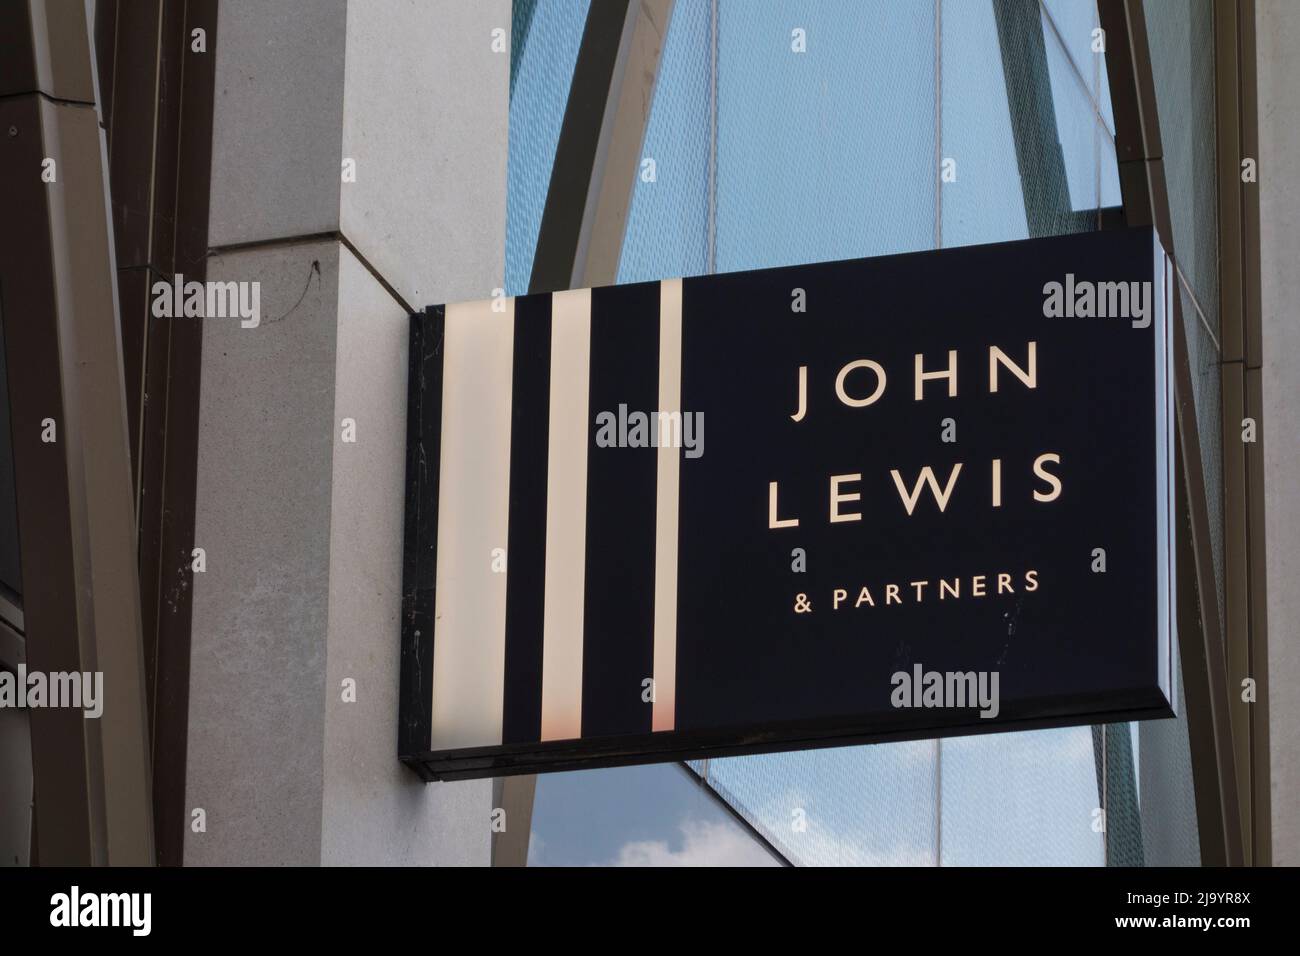 John Lewis & Partners sign on facade of building, Cheltenham, Gloucestershire, UK Stock Photo